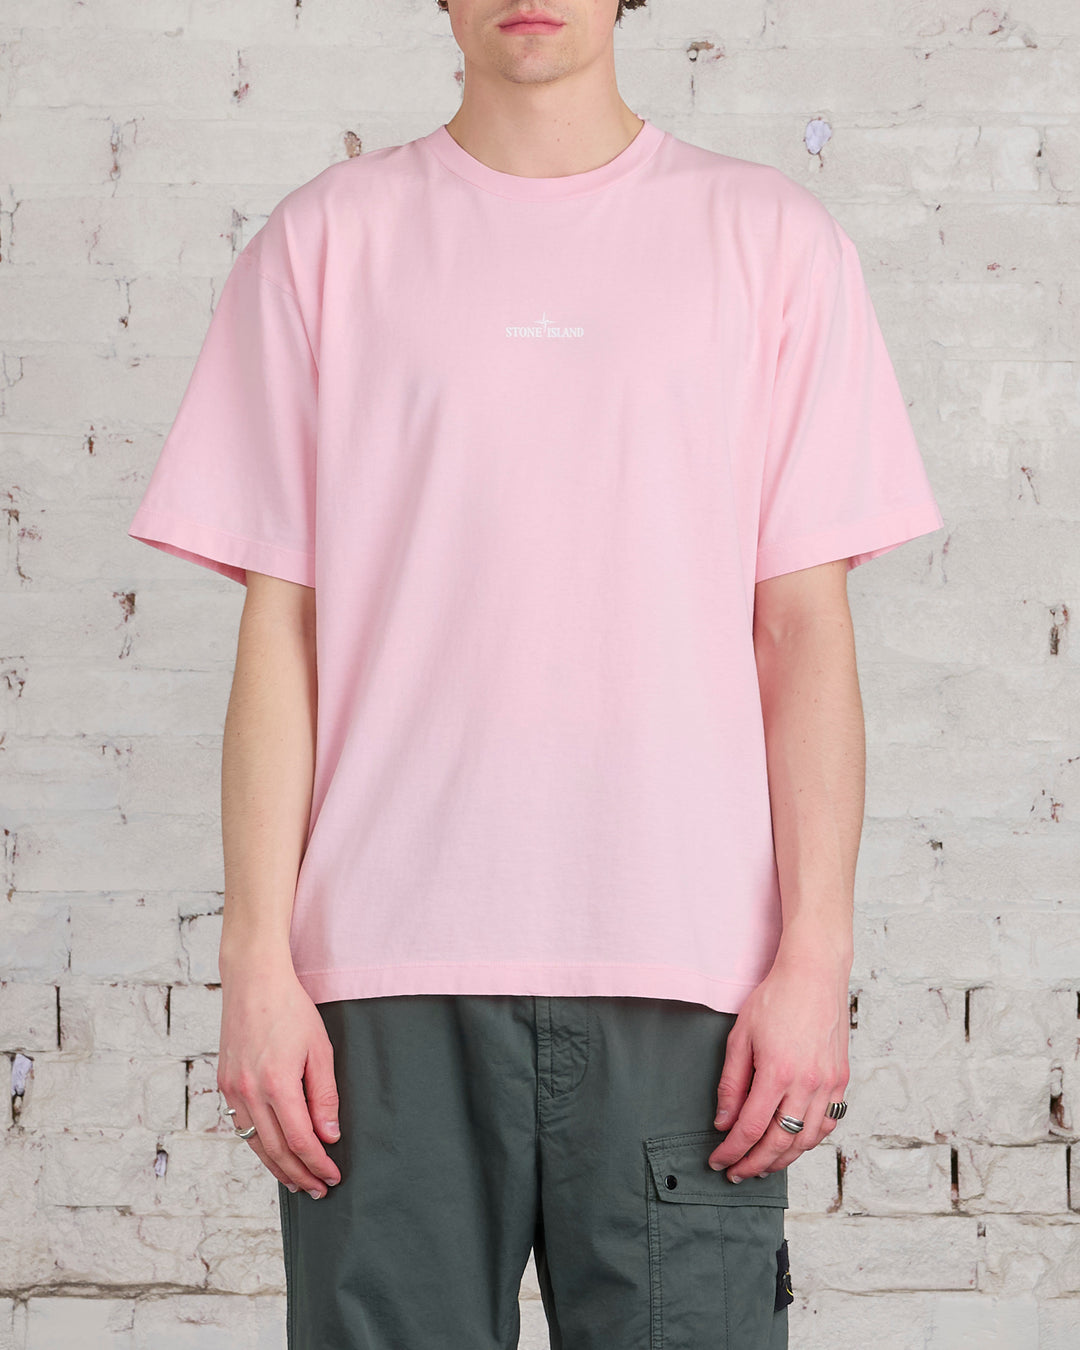 Stone Island Compass Print T-Shirt Pink